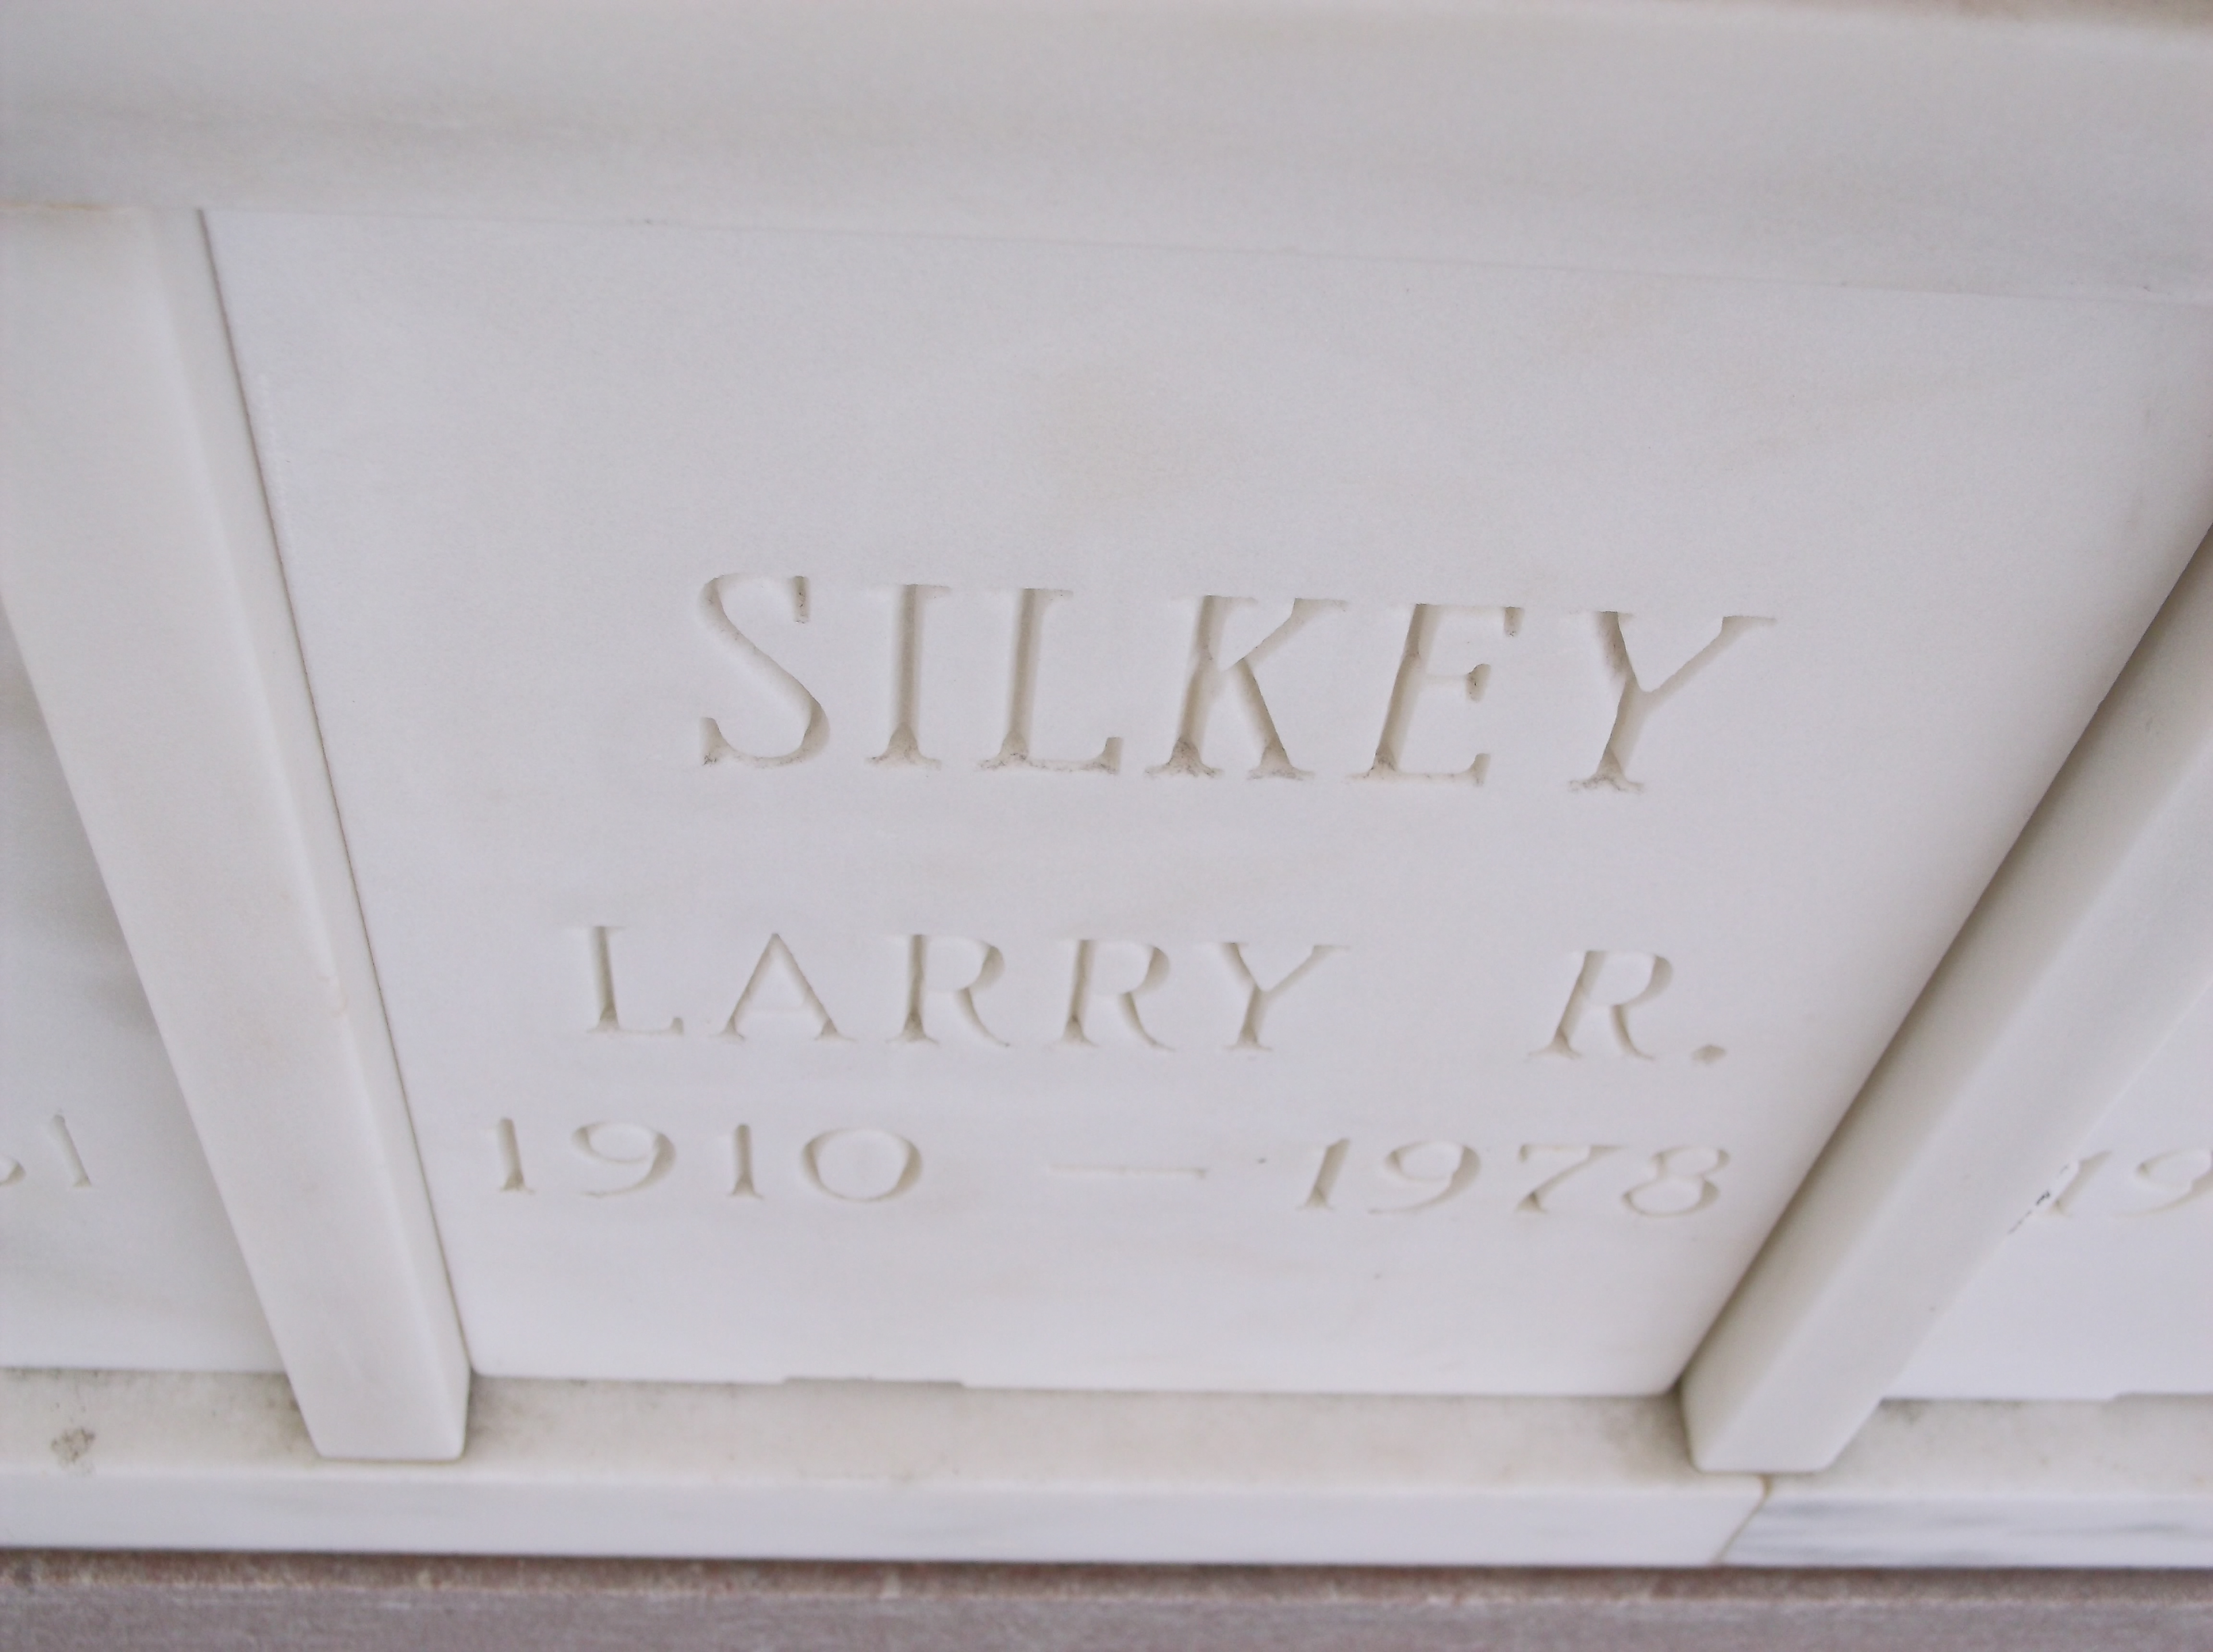 Larry R Silkey